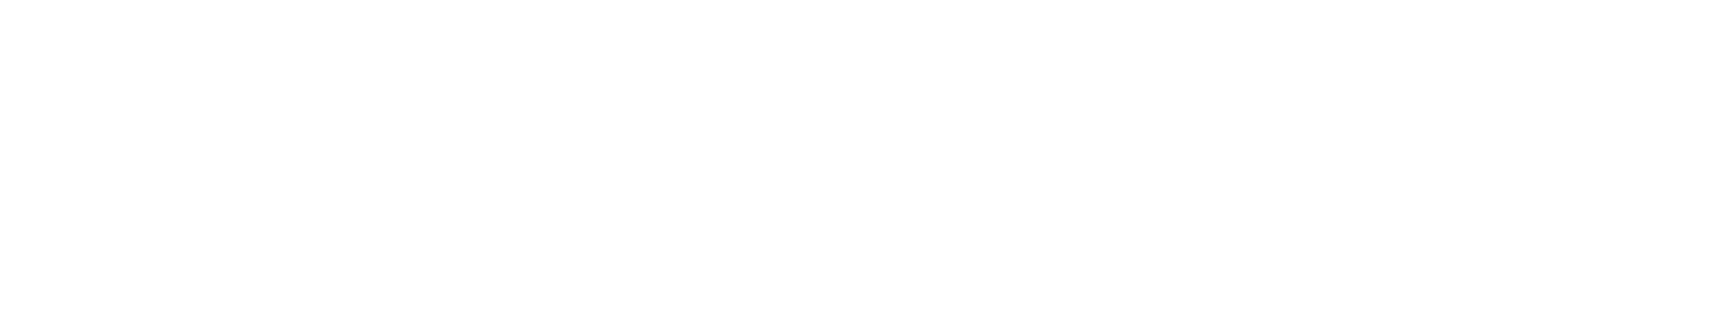 SMU library logo